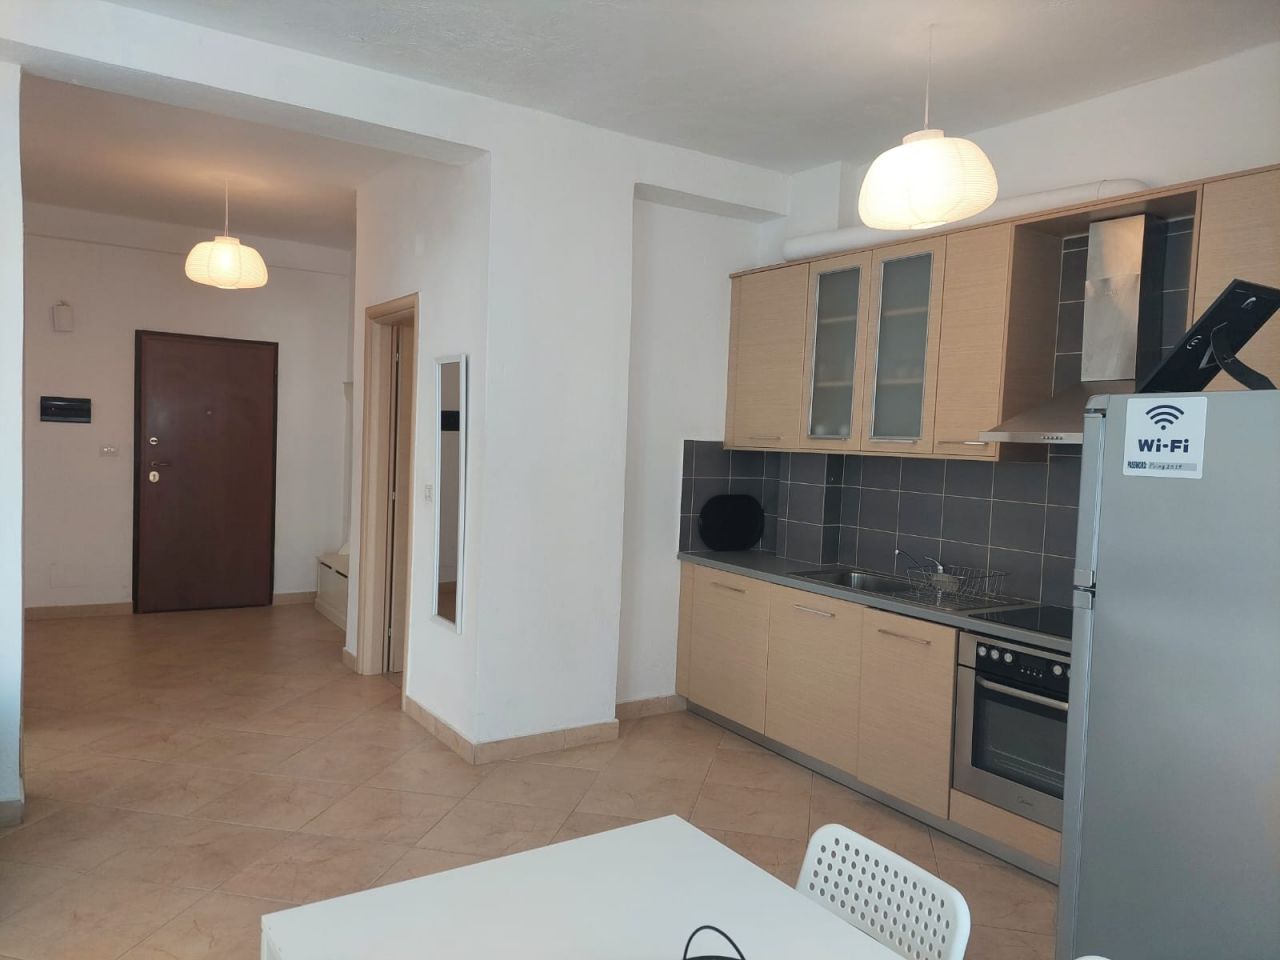 holiday apartment for rent in saranda, albania